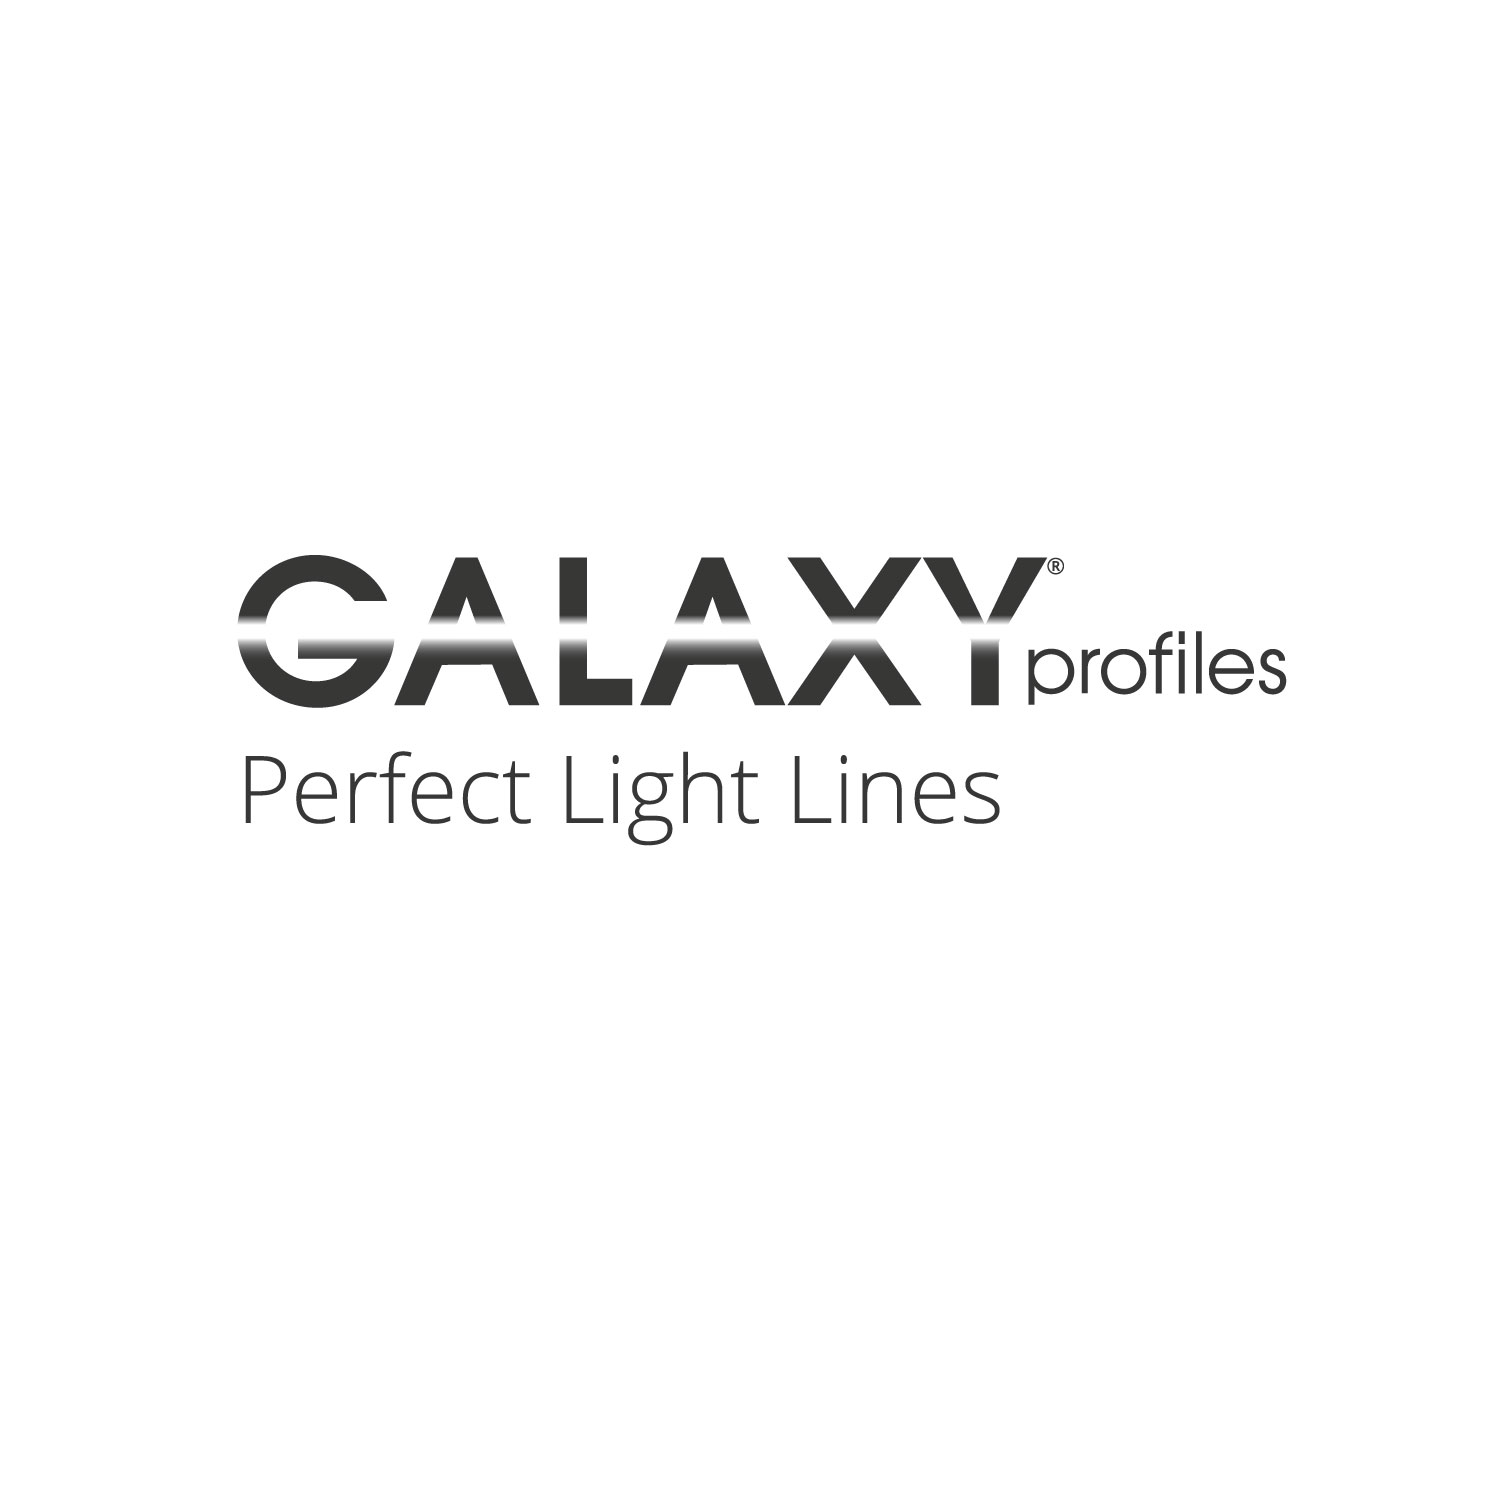 Galaxy profiles - Perfect Light Lines